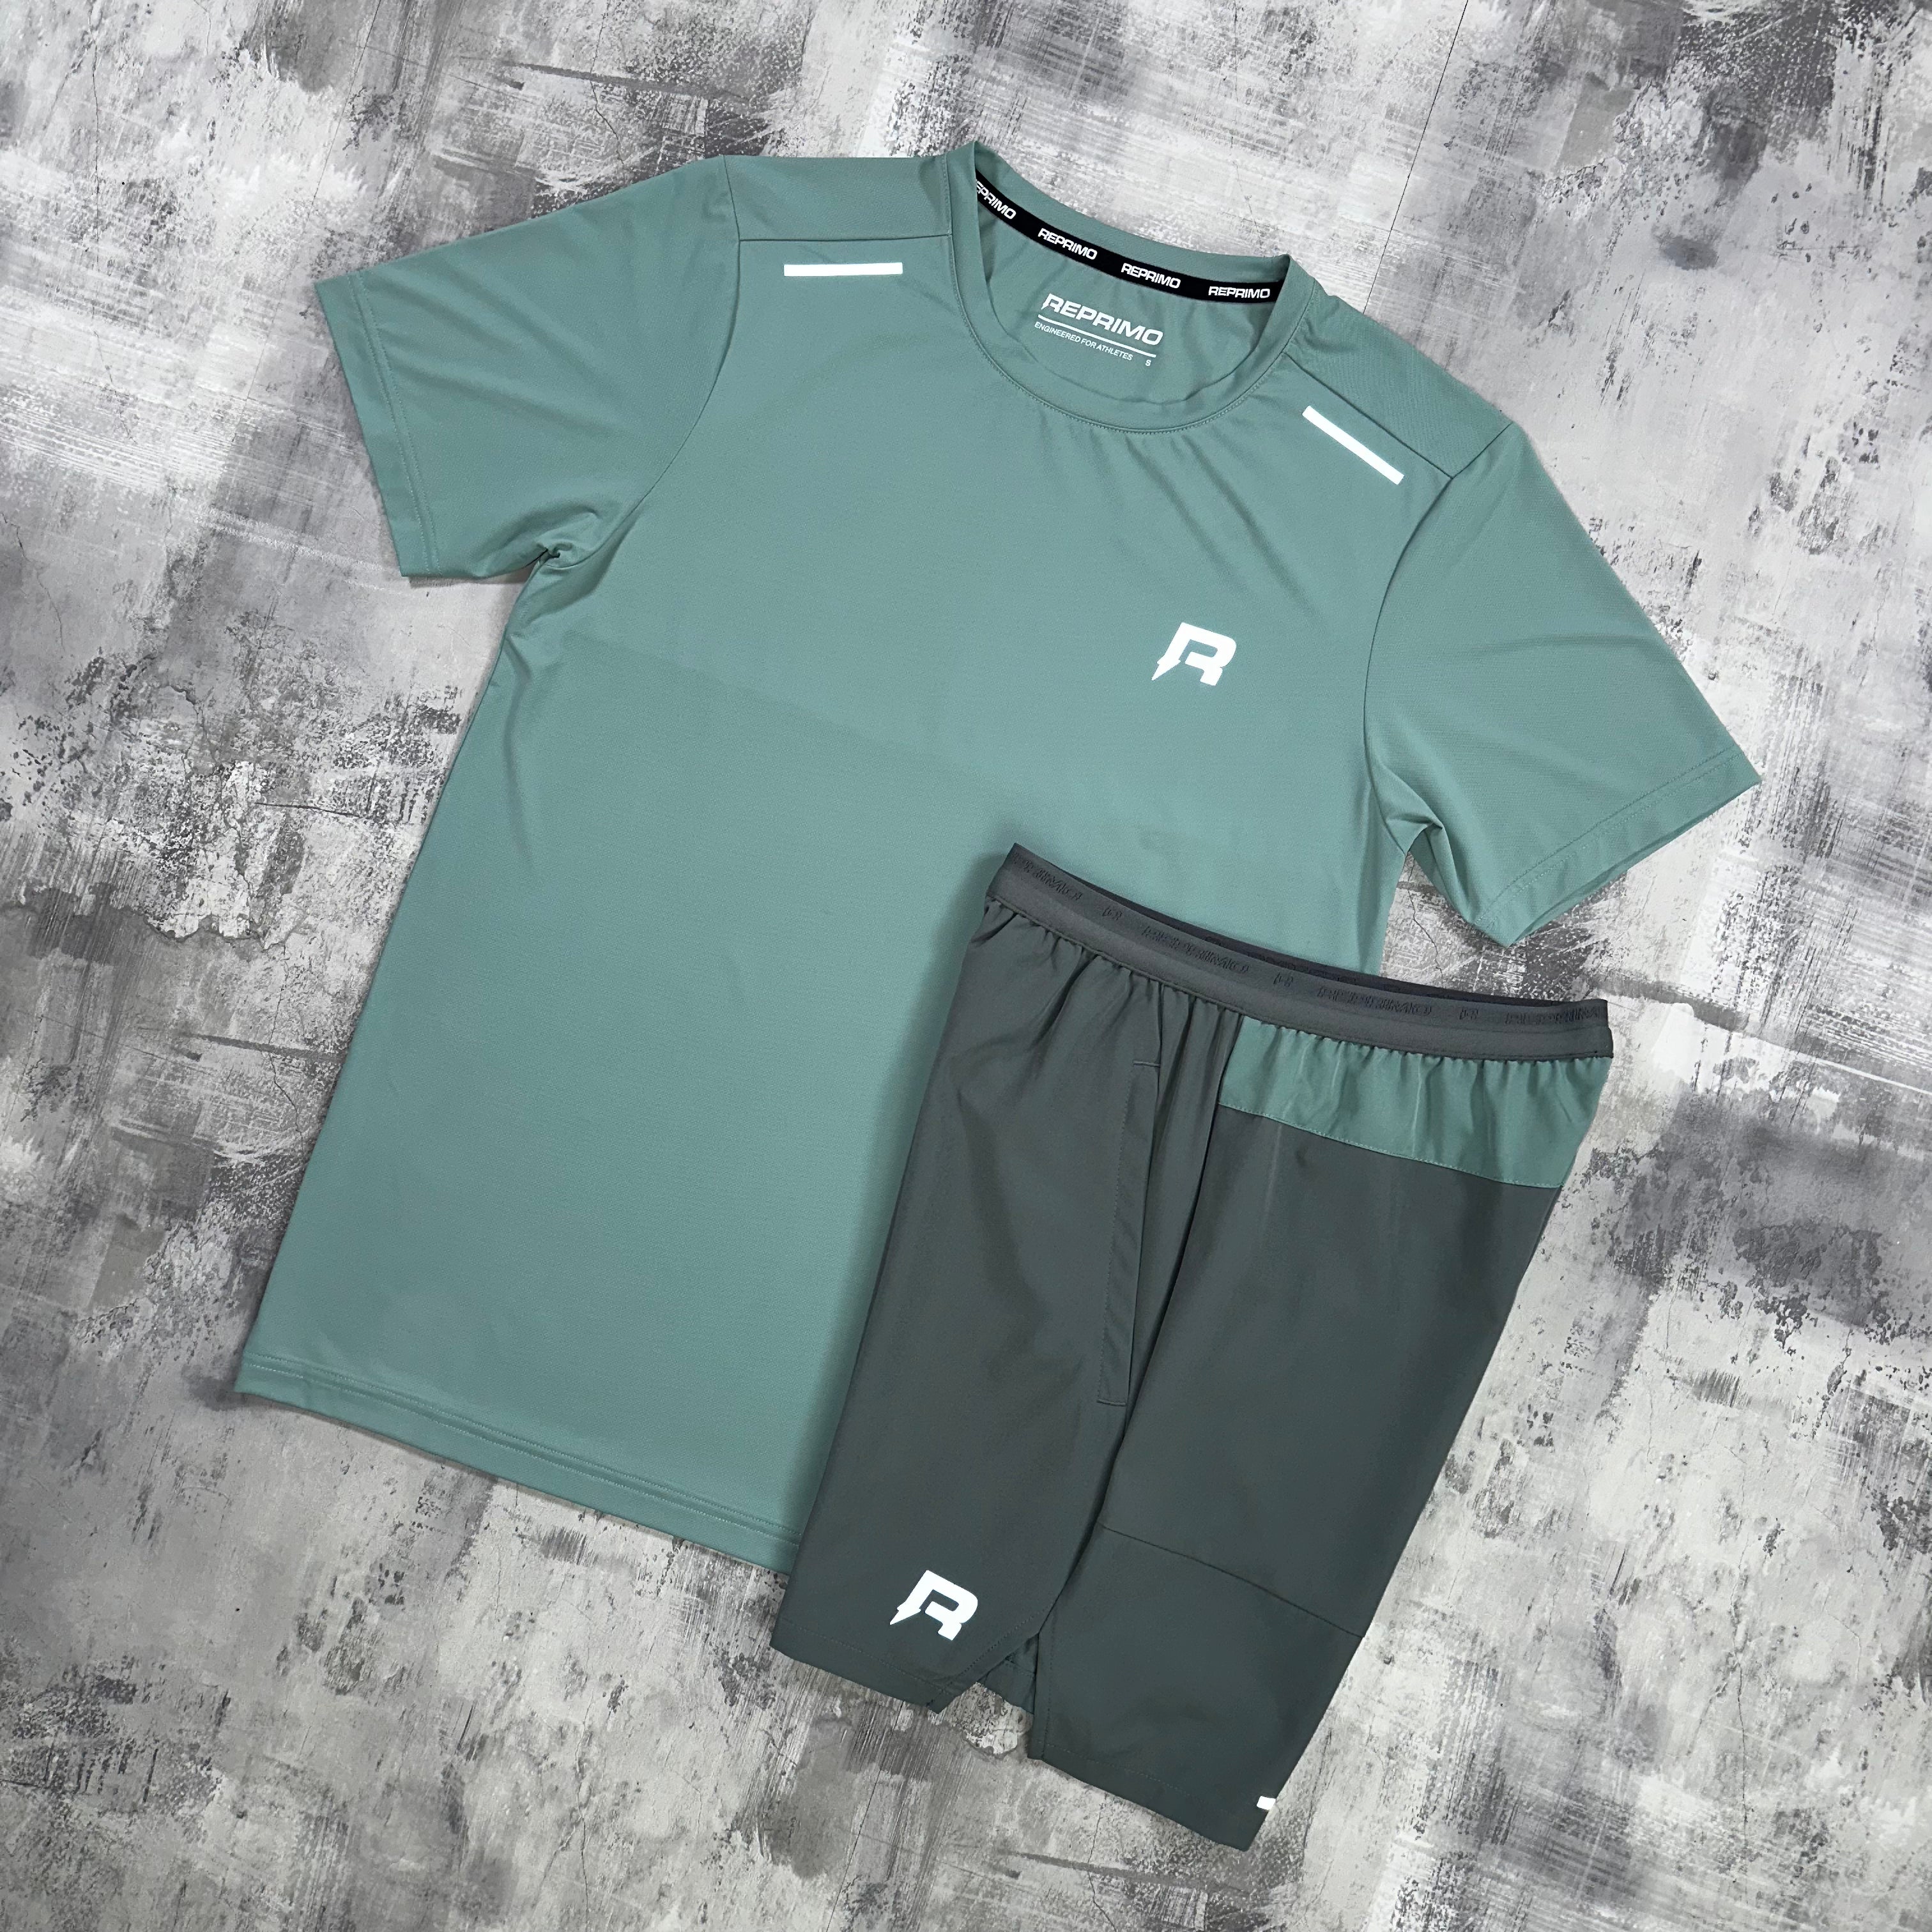 Reprimo Flight Set Sage / Dark Forest - t-shirt & shorts